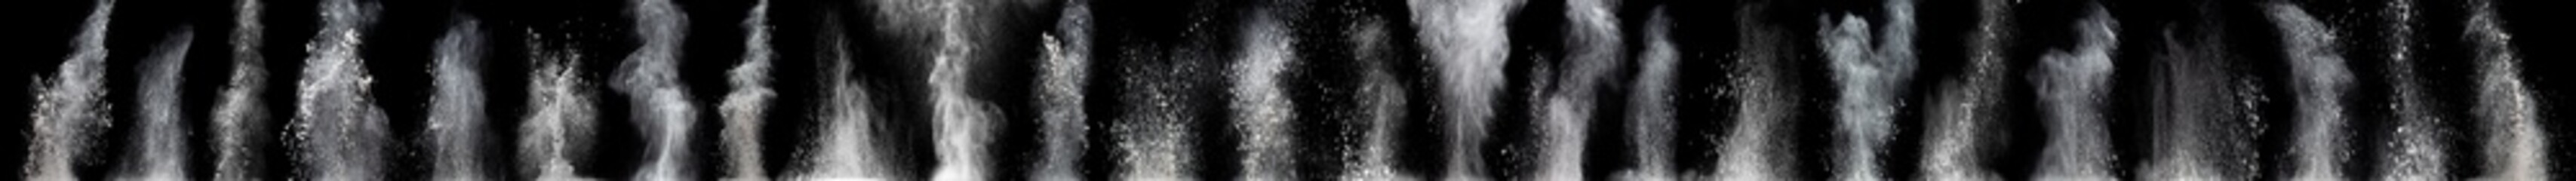 White powder explosion cloud against black background.White dust particles splash